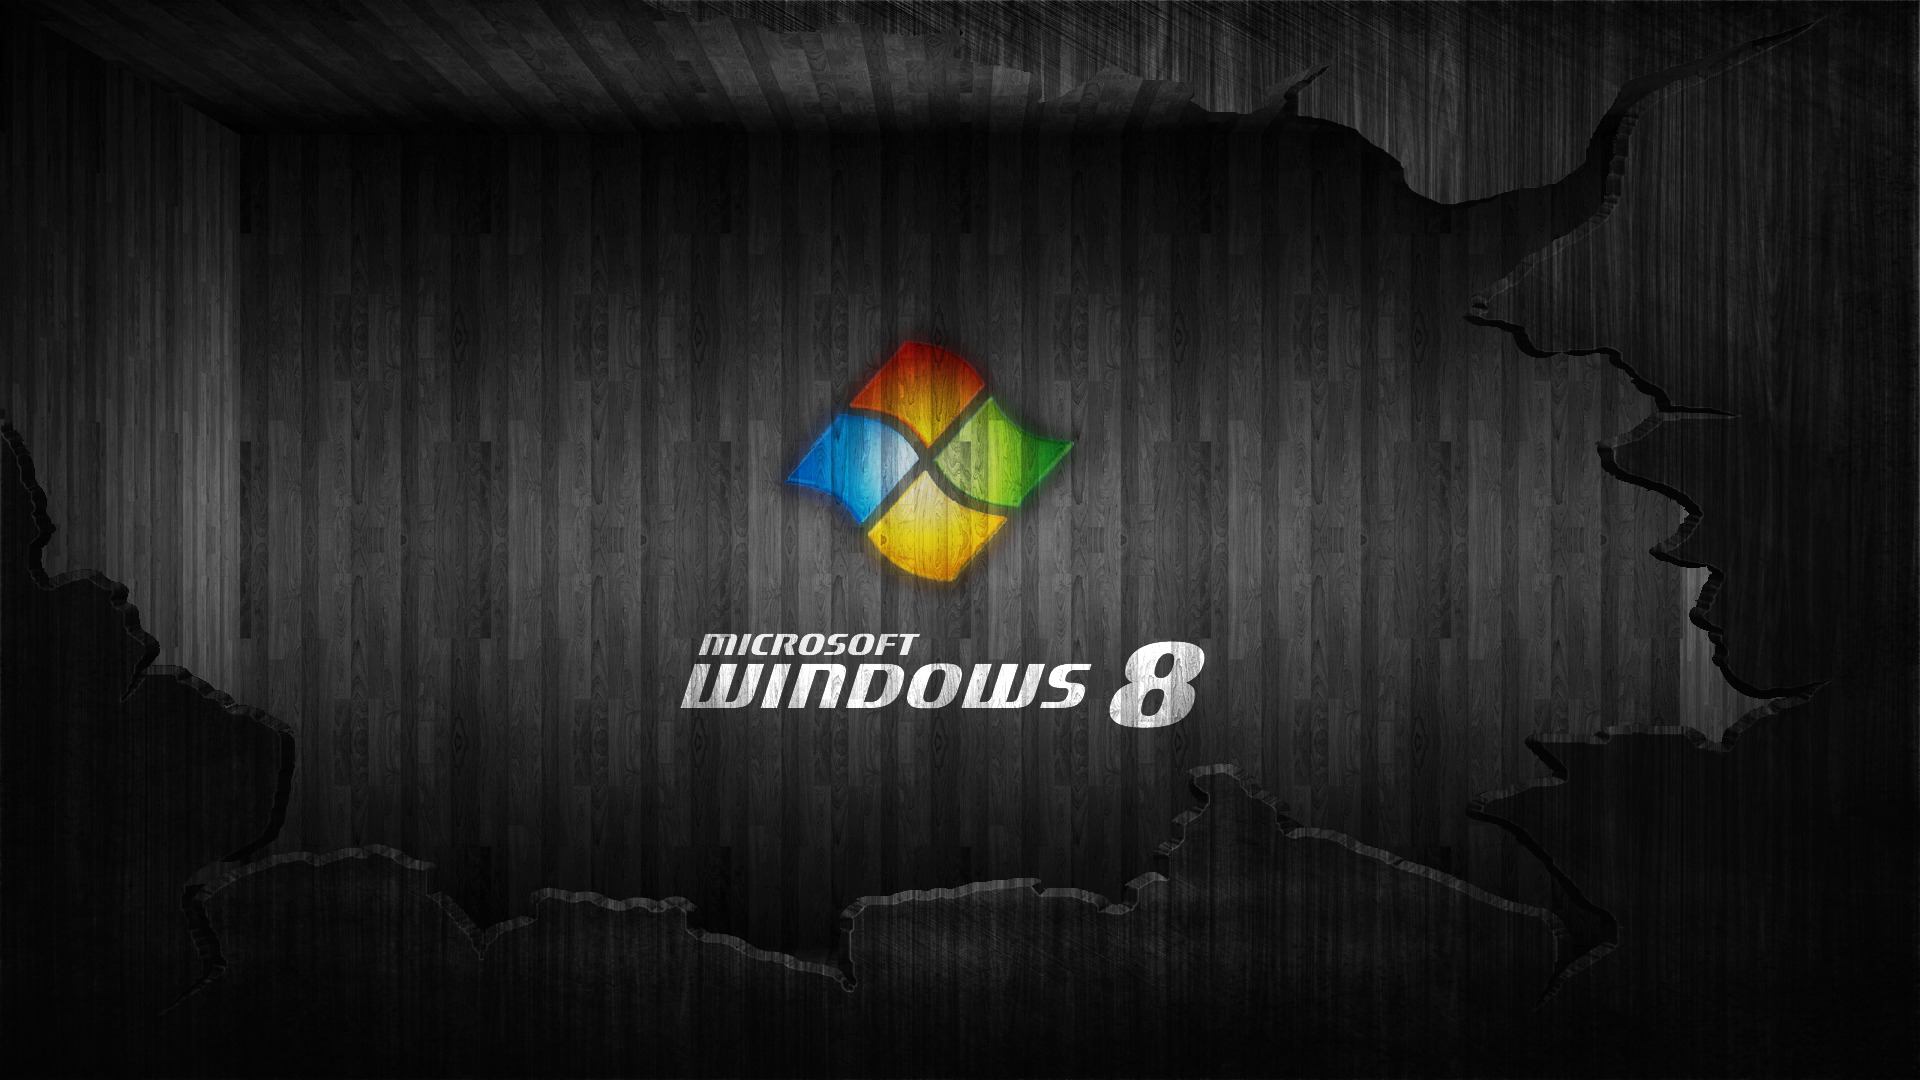 WIndows 8 Wallpaper Desktop Wallpapers HD / Desktop and Mobile Backgrounds